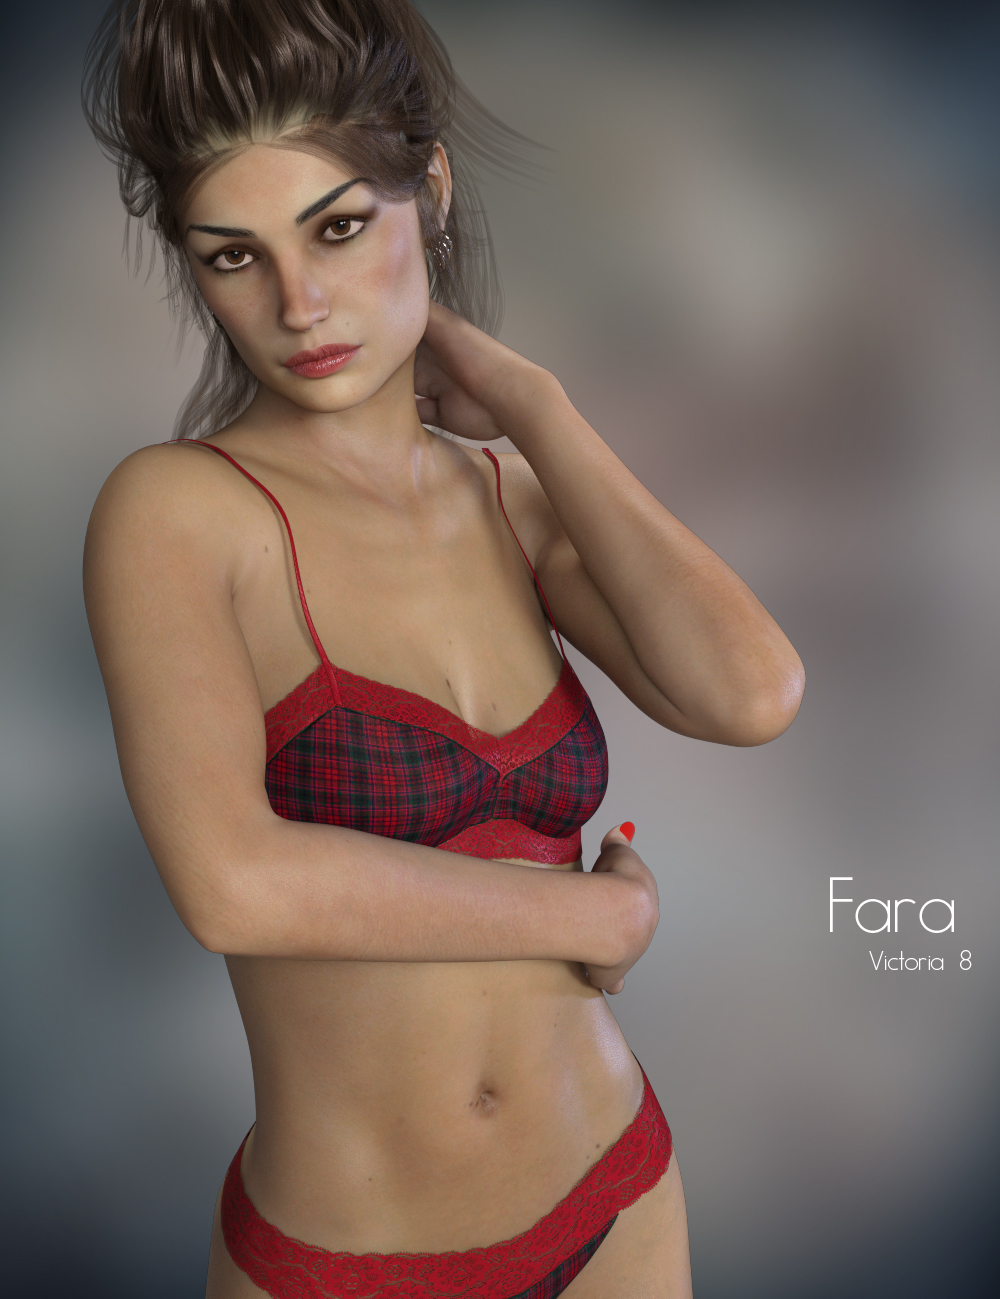 P3D Fara for Victoria 8 by: P3Design, 3D Models by Daz 3D